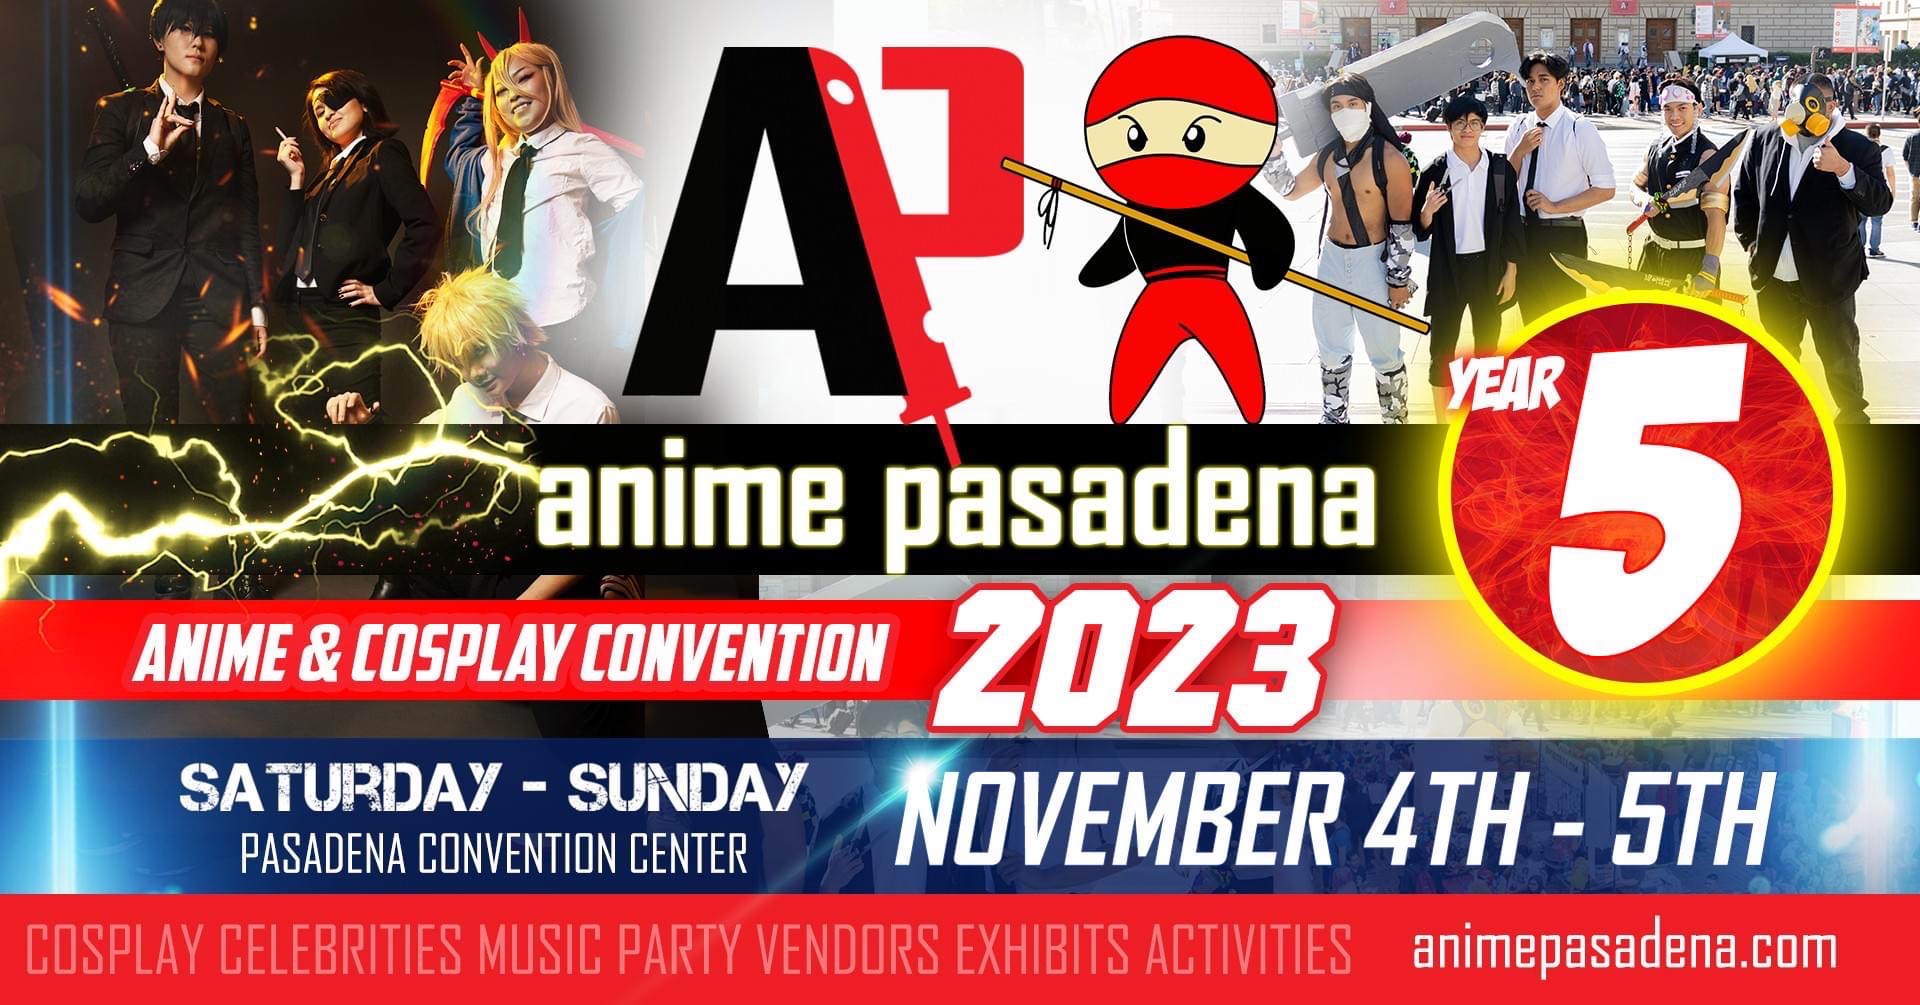 Anime pasadena cosplay & nerd convention